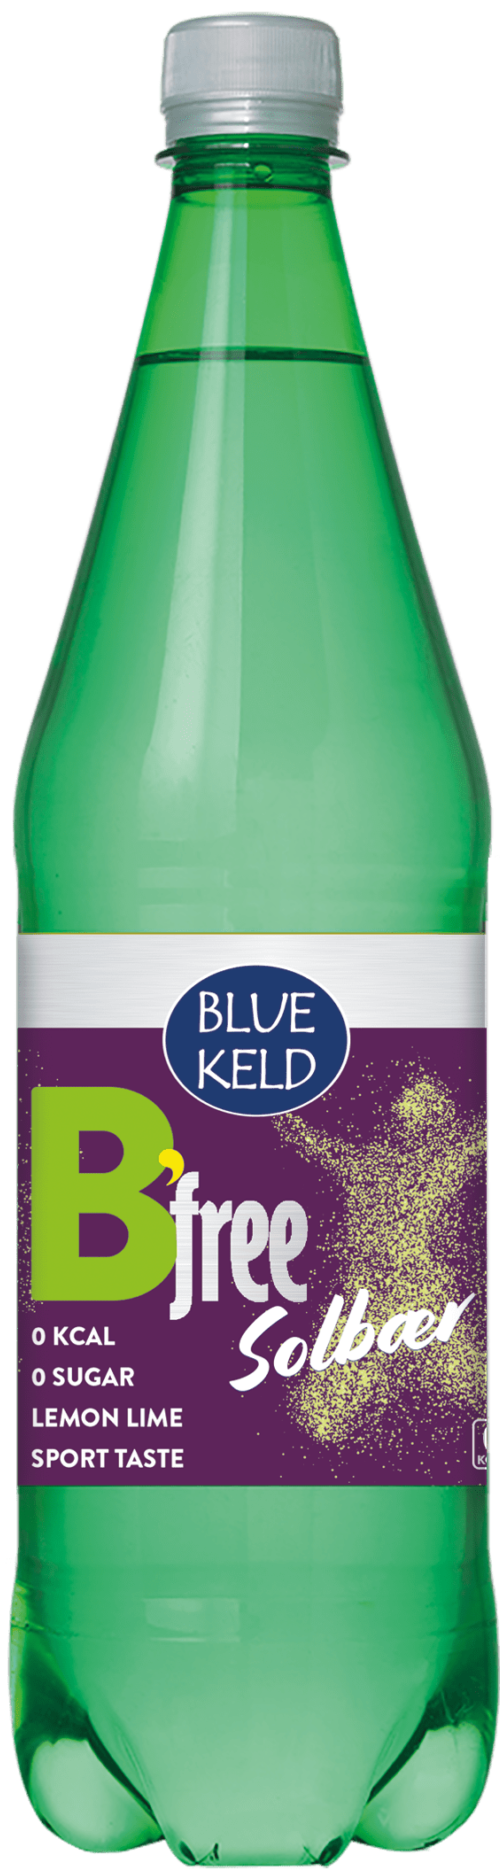 Blue Keld B'Free Solbær